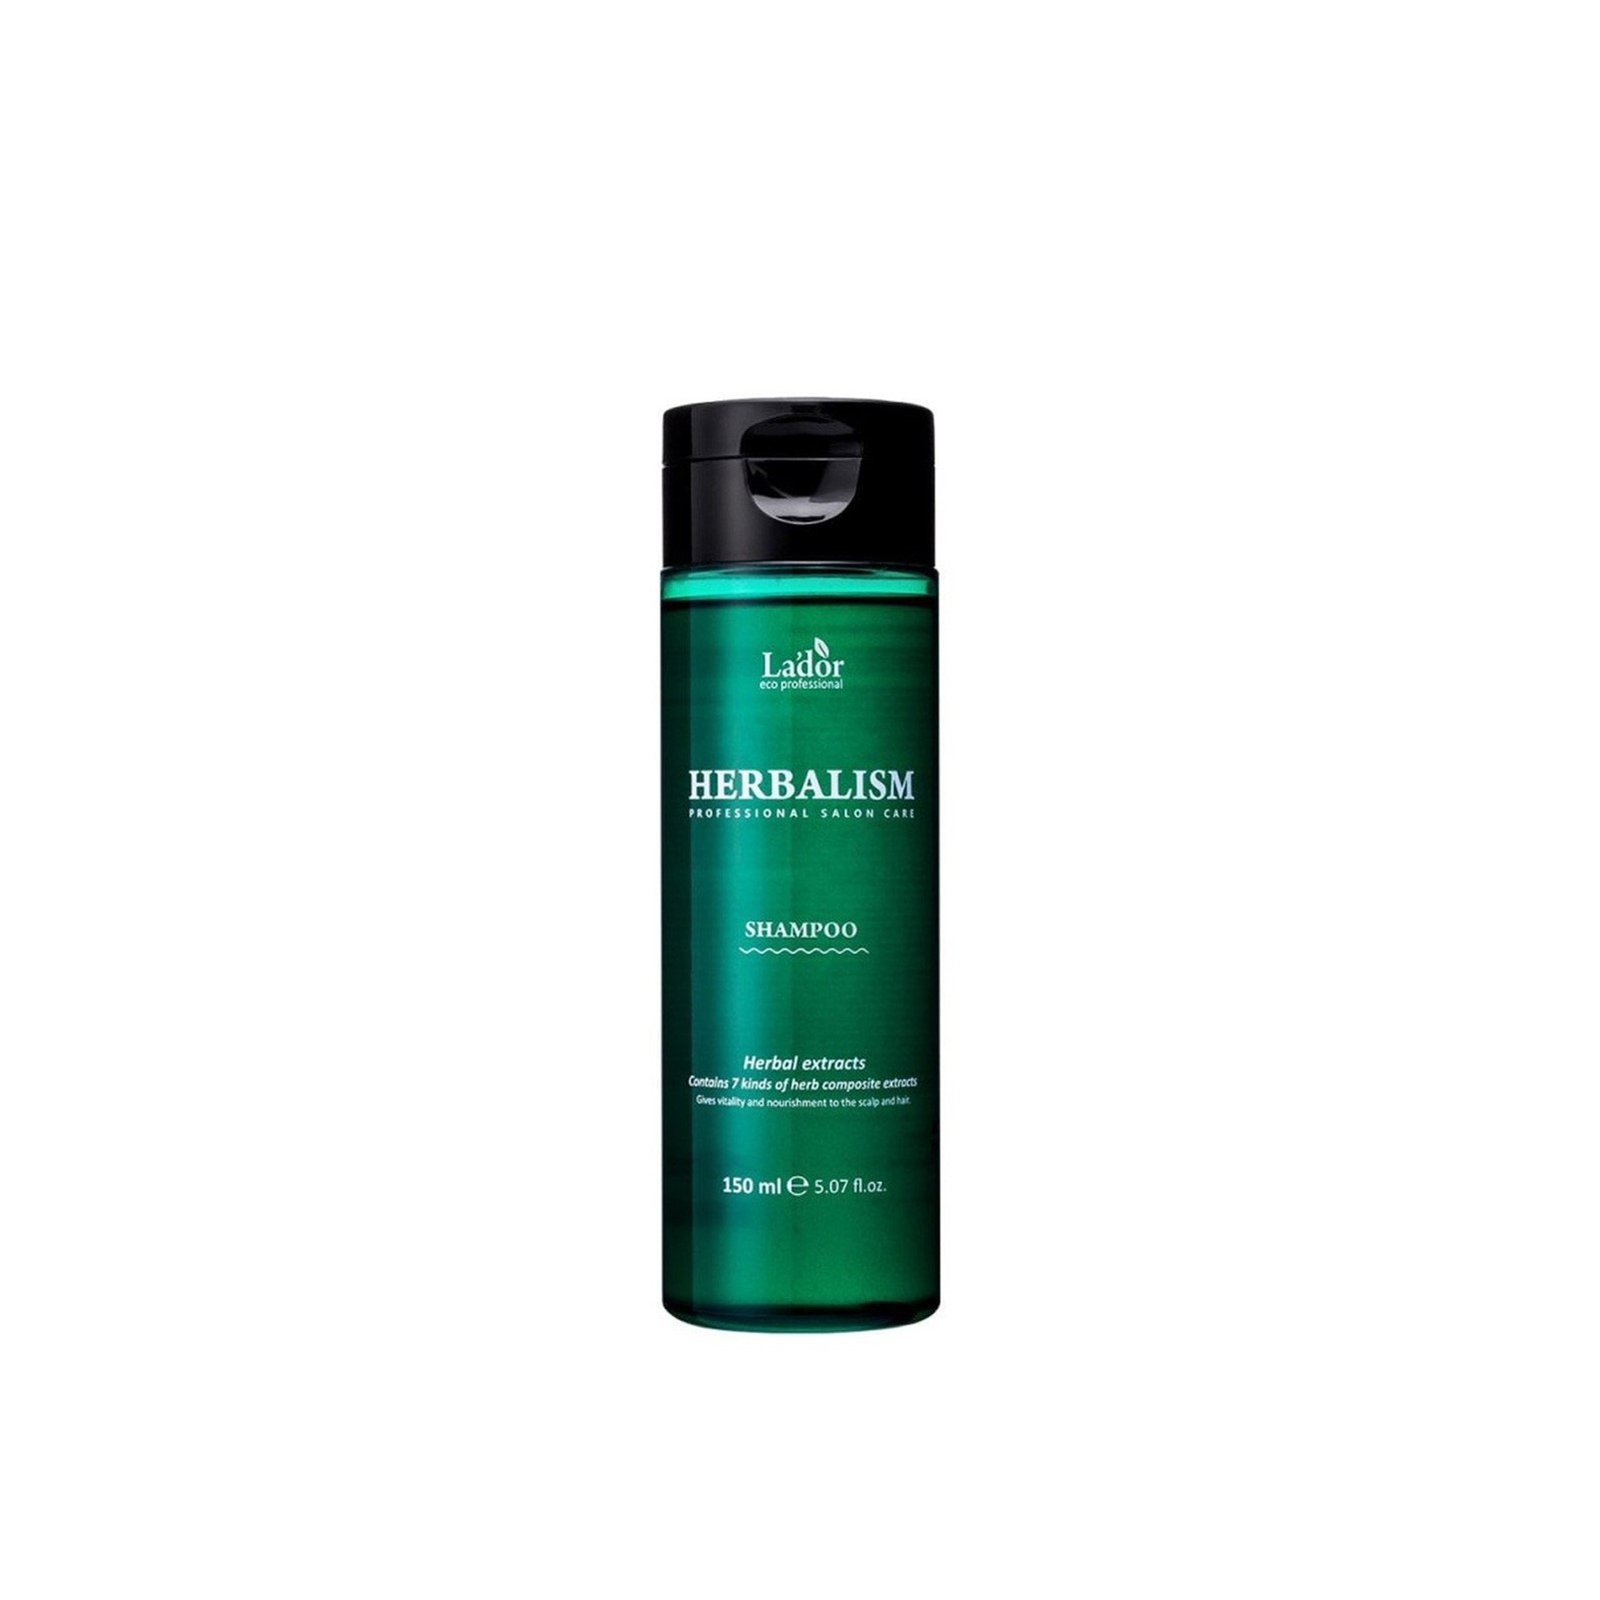 Lador Herbalism Shampoo 150ml (5.07 fl oz)